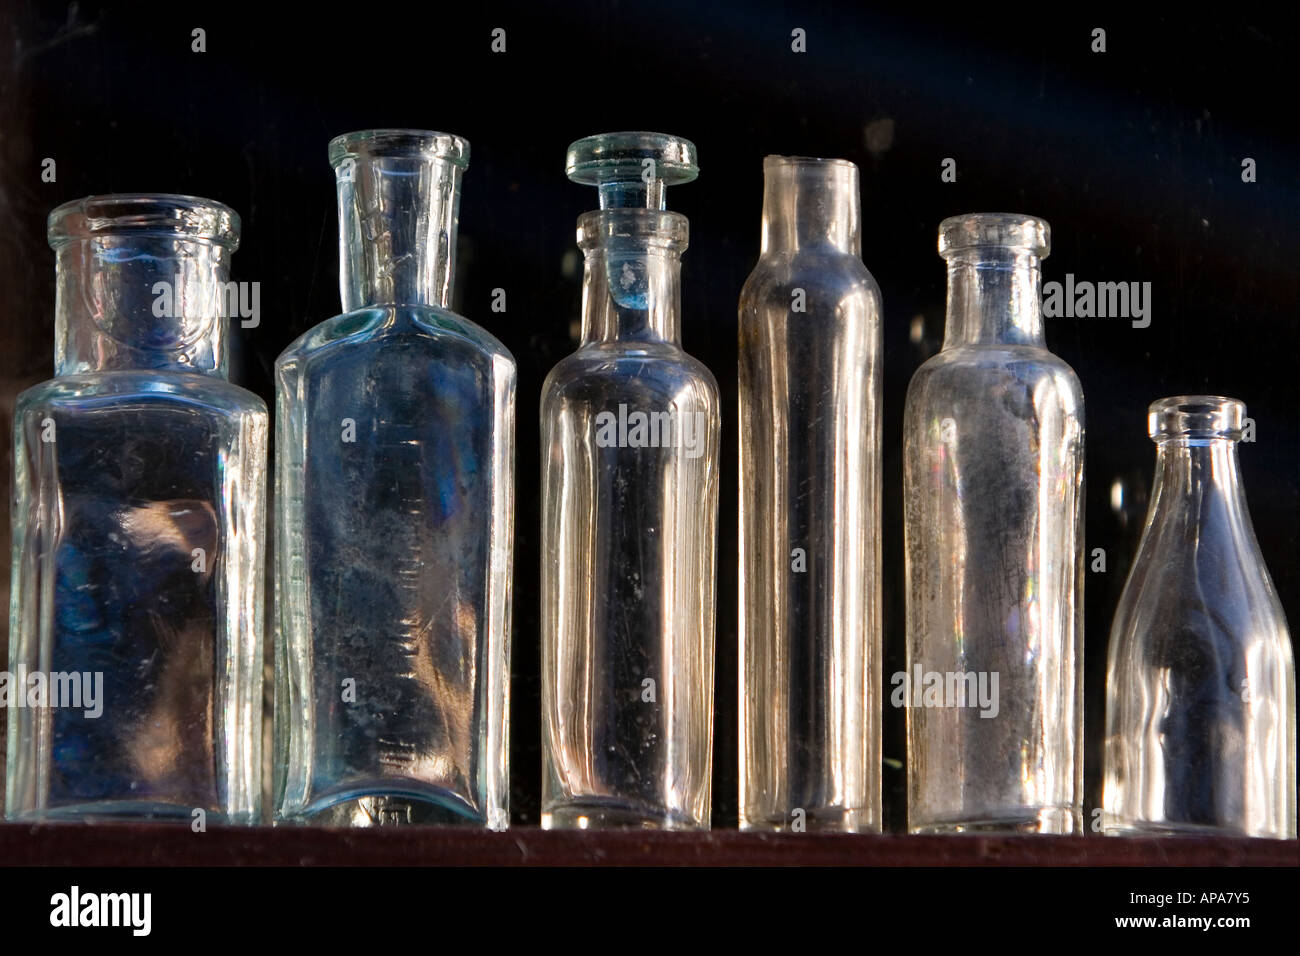 Old glass bottles on shelf against a dark background Stock Photo